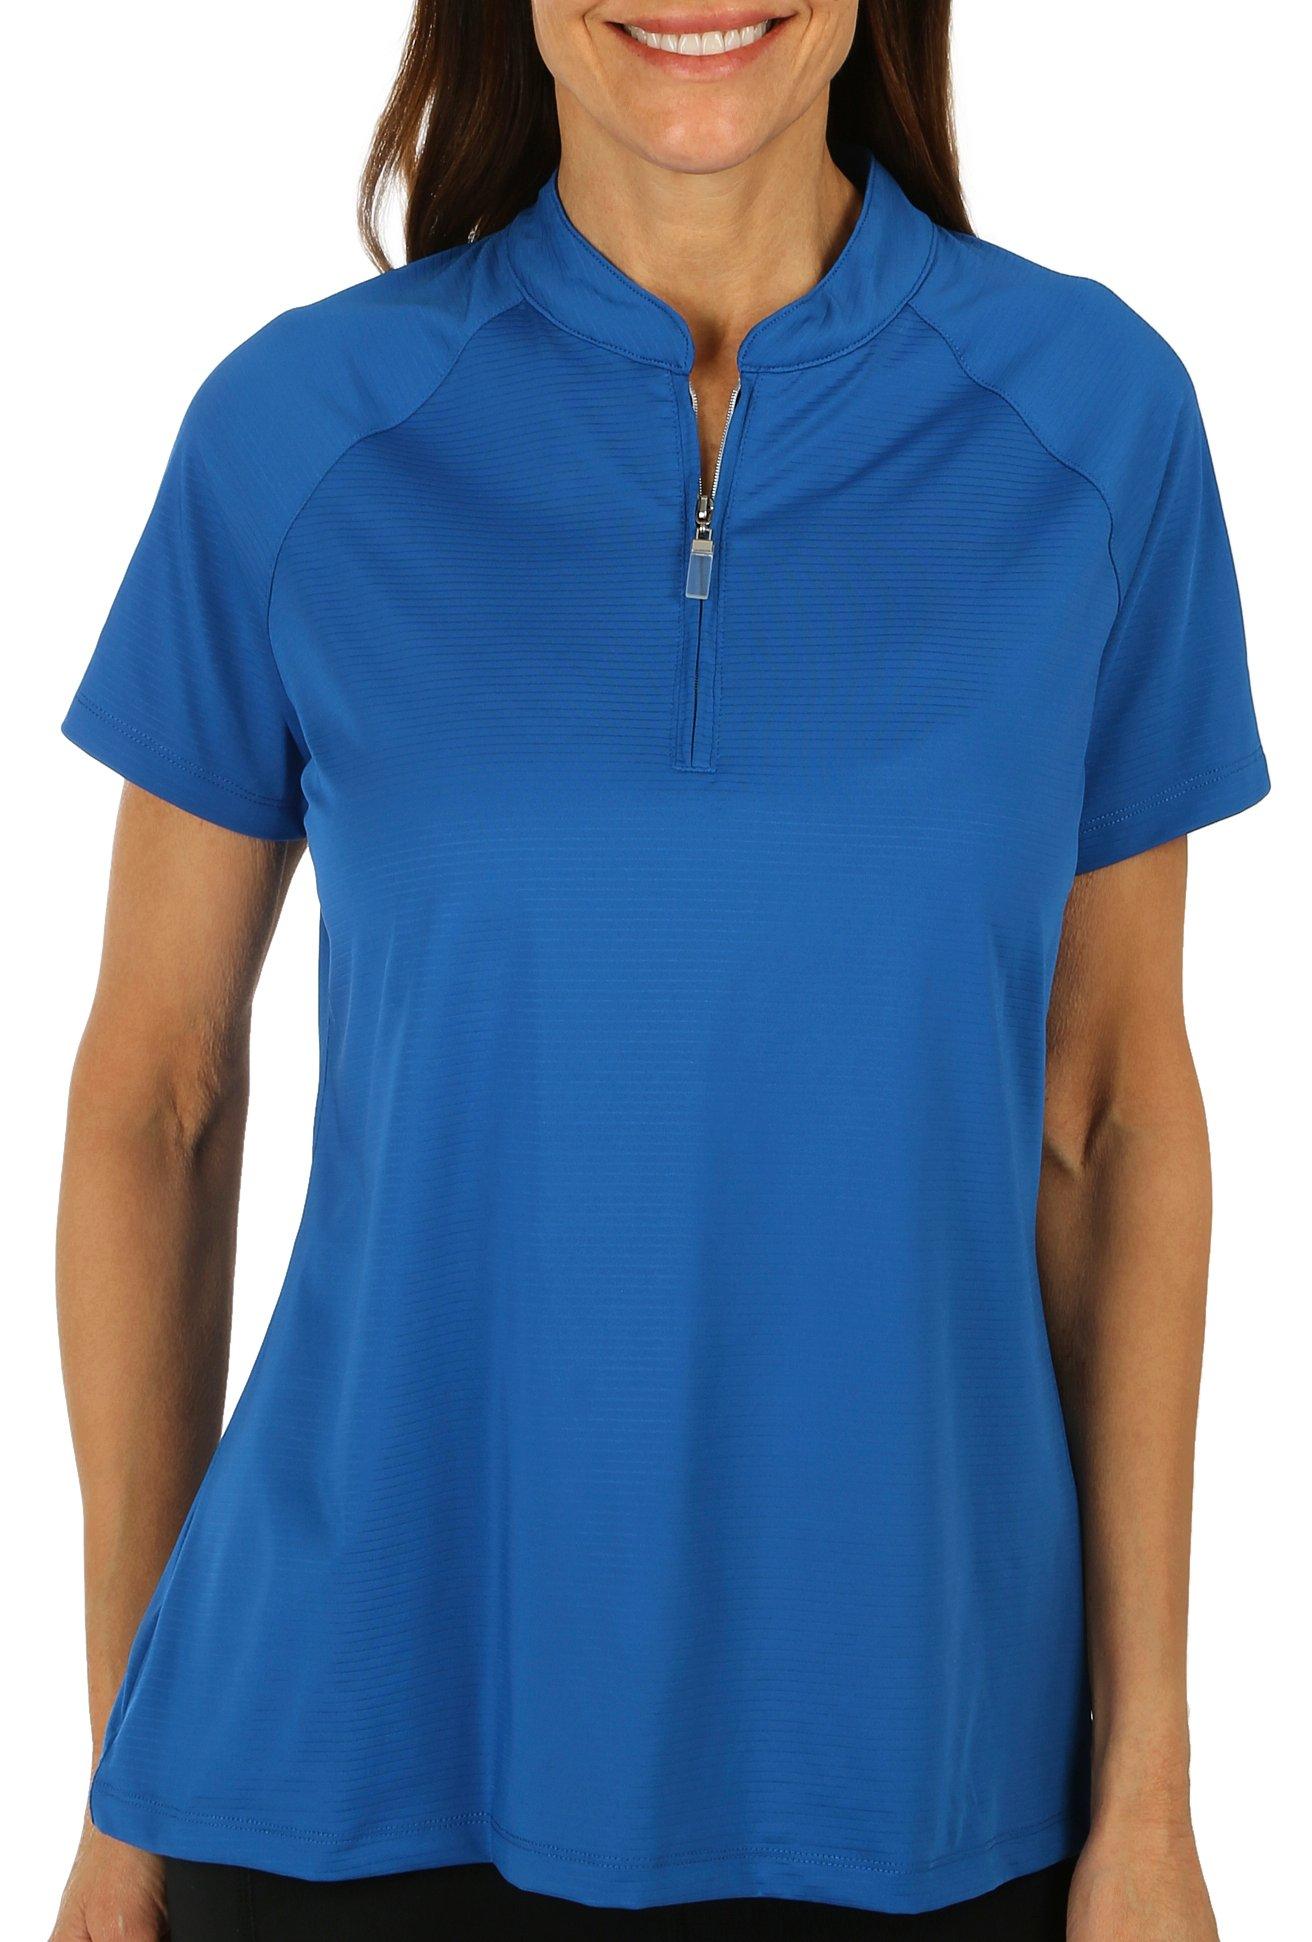 Coral Bay Golf Womens 1/4 Zip Short Sleeve Mock Polo Top